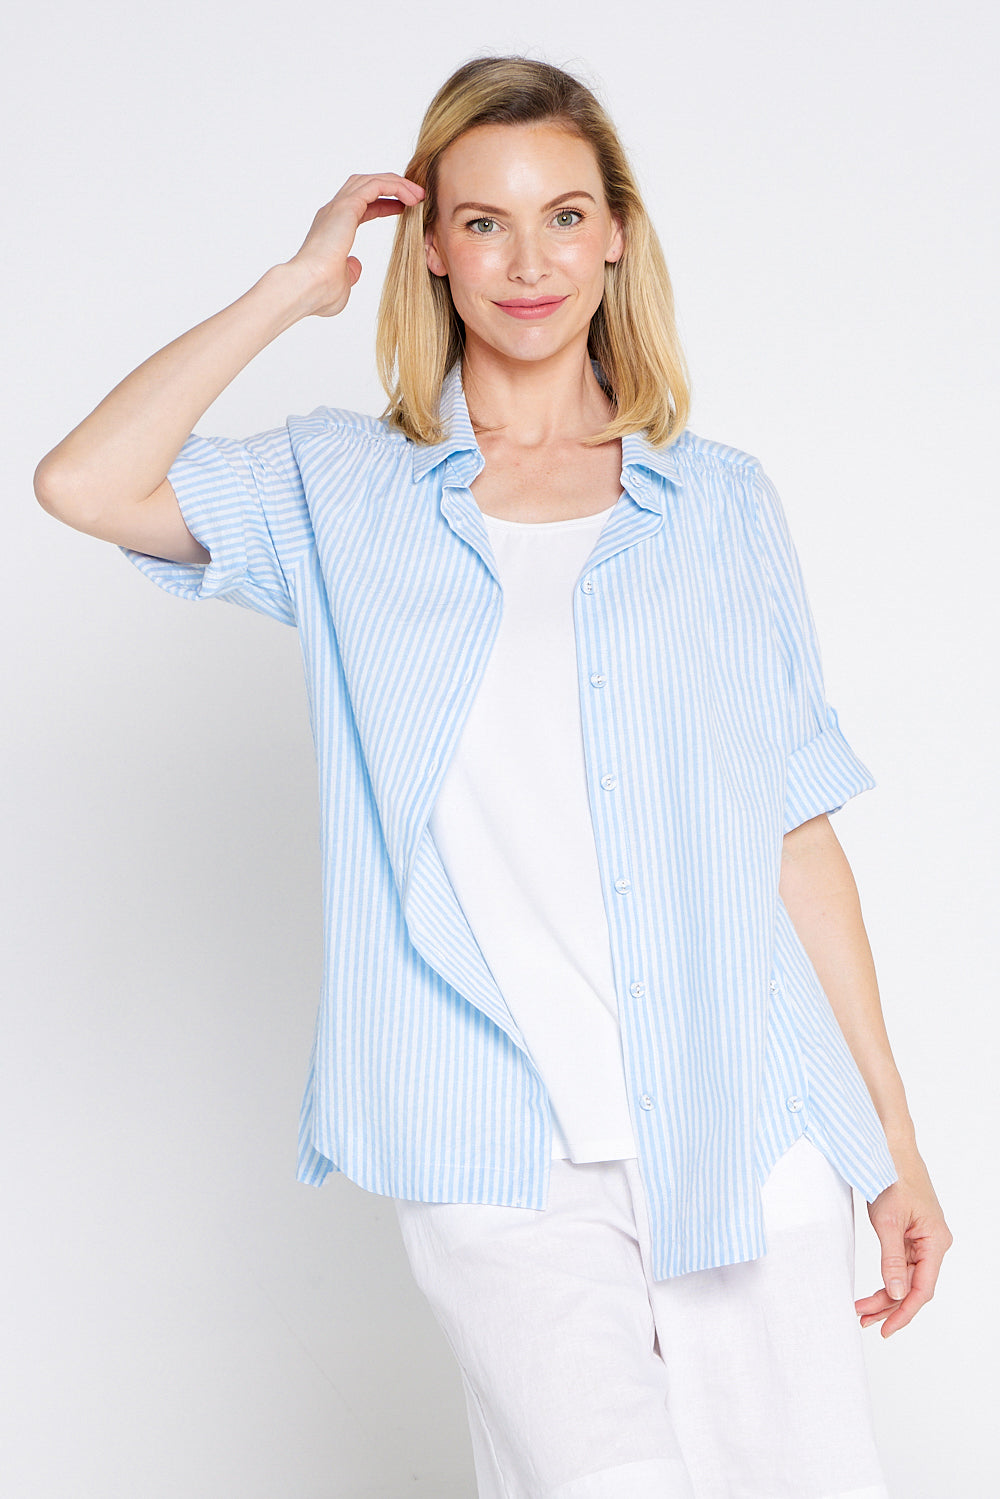 Linderman Cotton Shirt - Blue Stripe